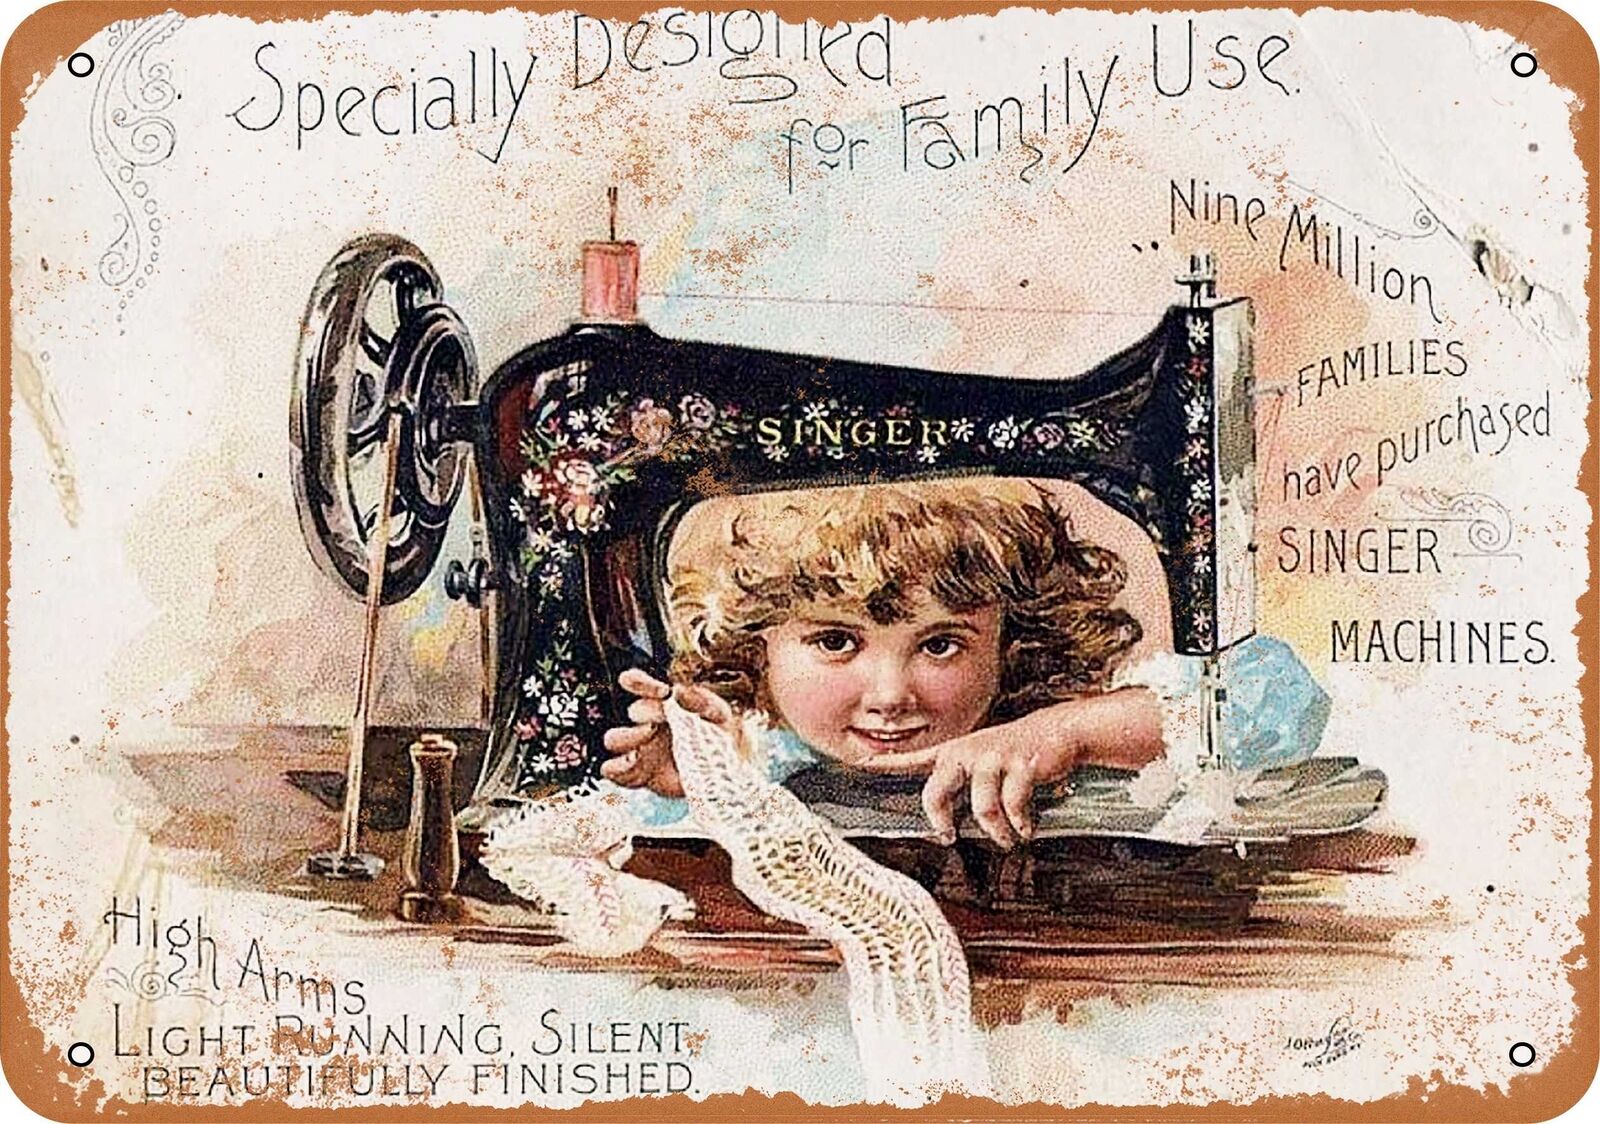 Metal Sign - Singer Sewing Machines - Vintage Look Reproduction 4